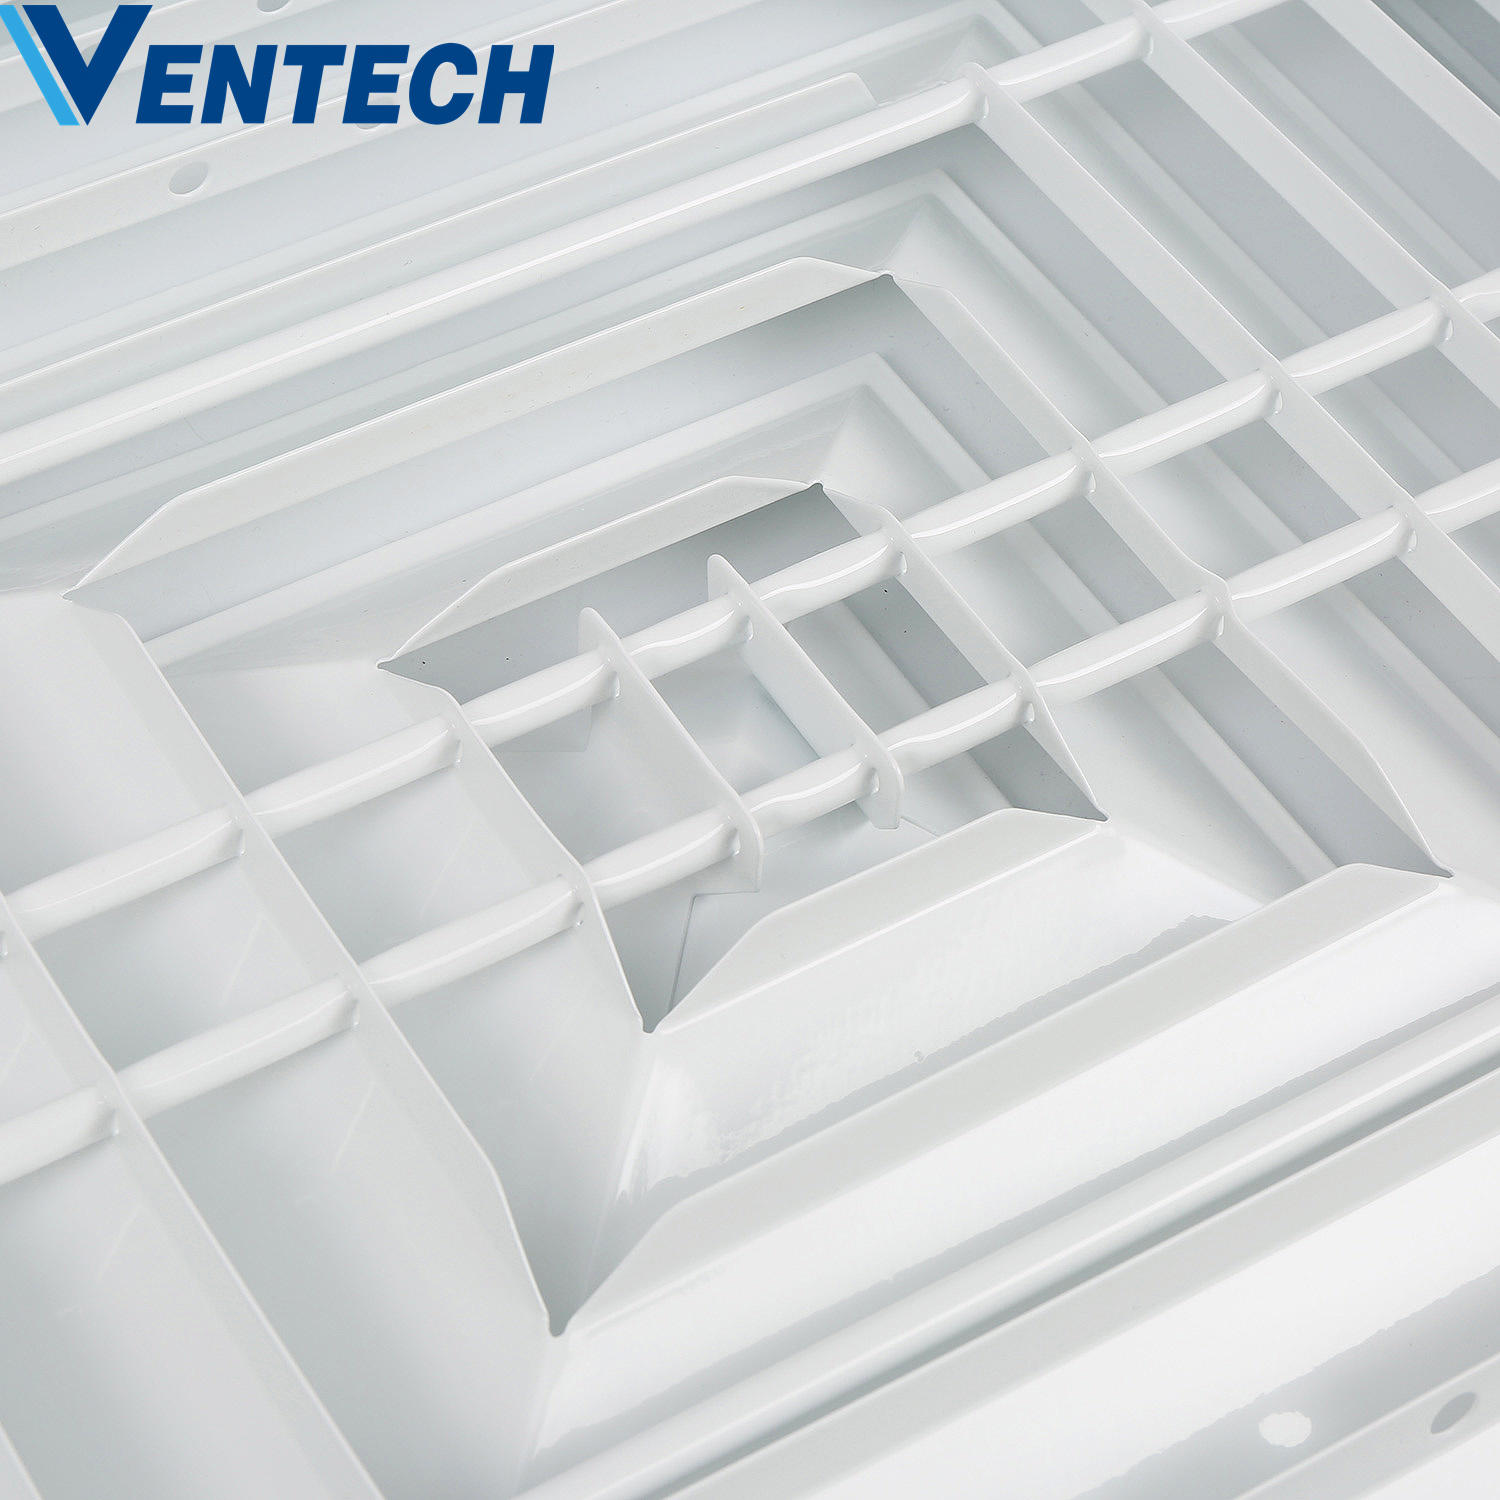 Hvac System Ventilation Air Conditioning Aluminum  Square ABS Ceiling Diffusers